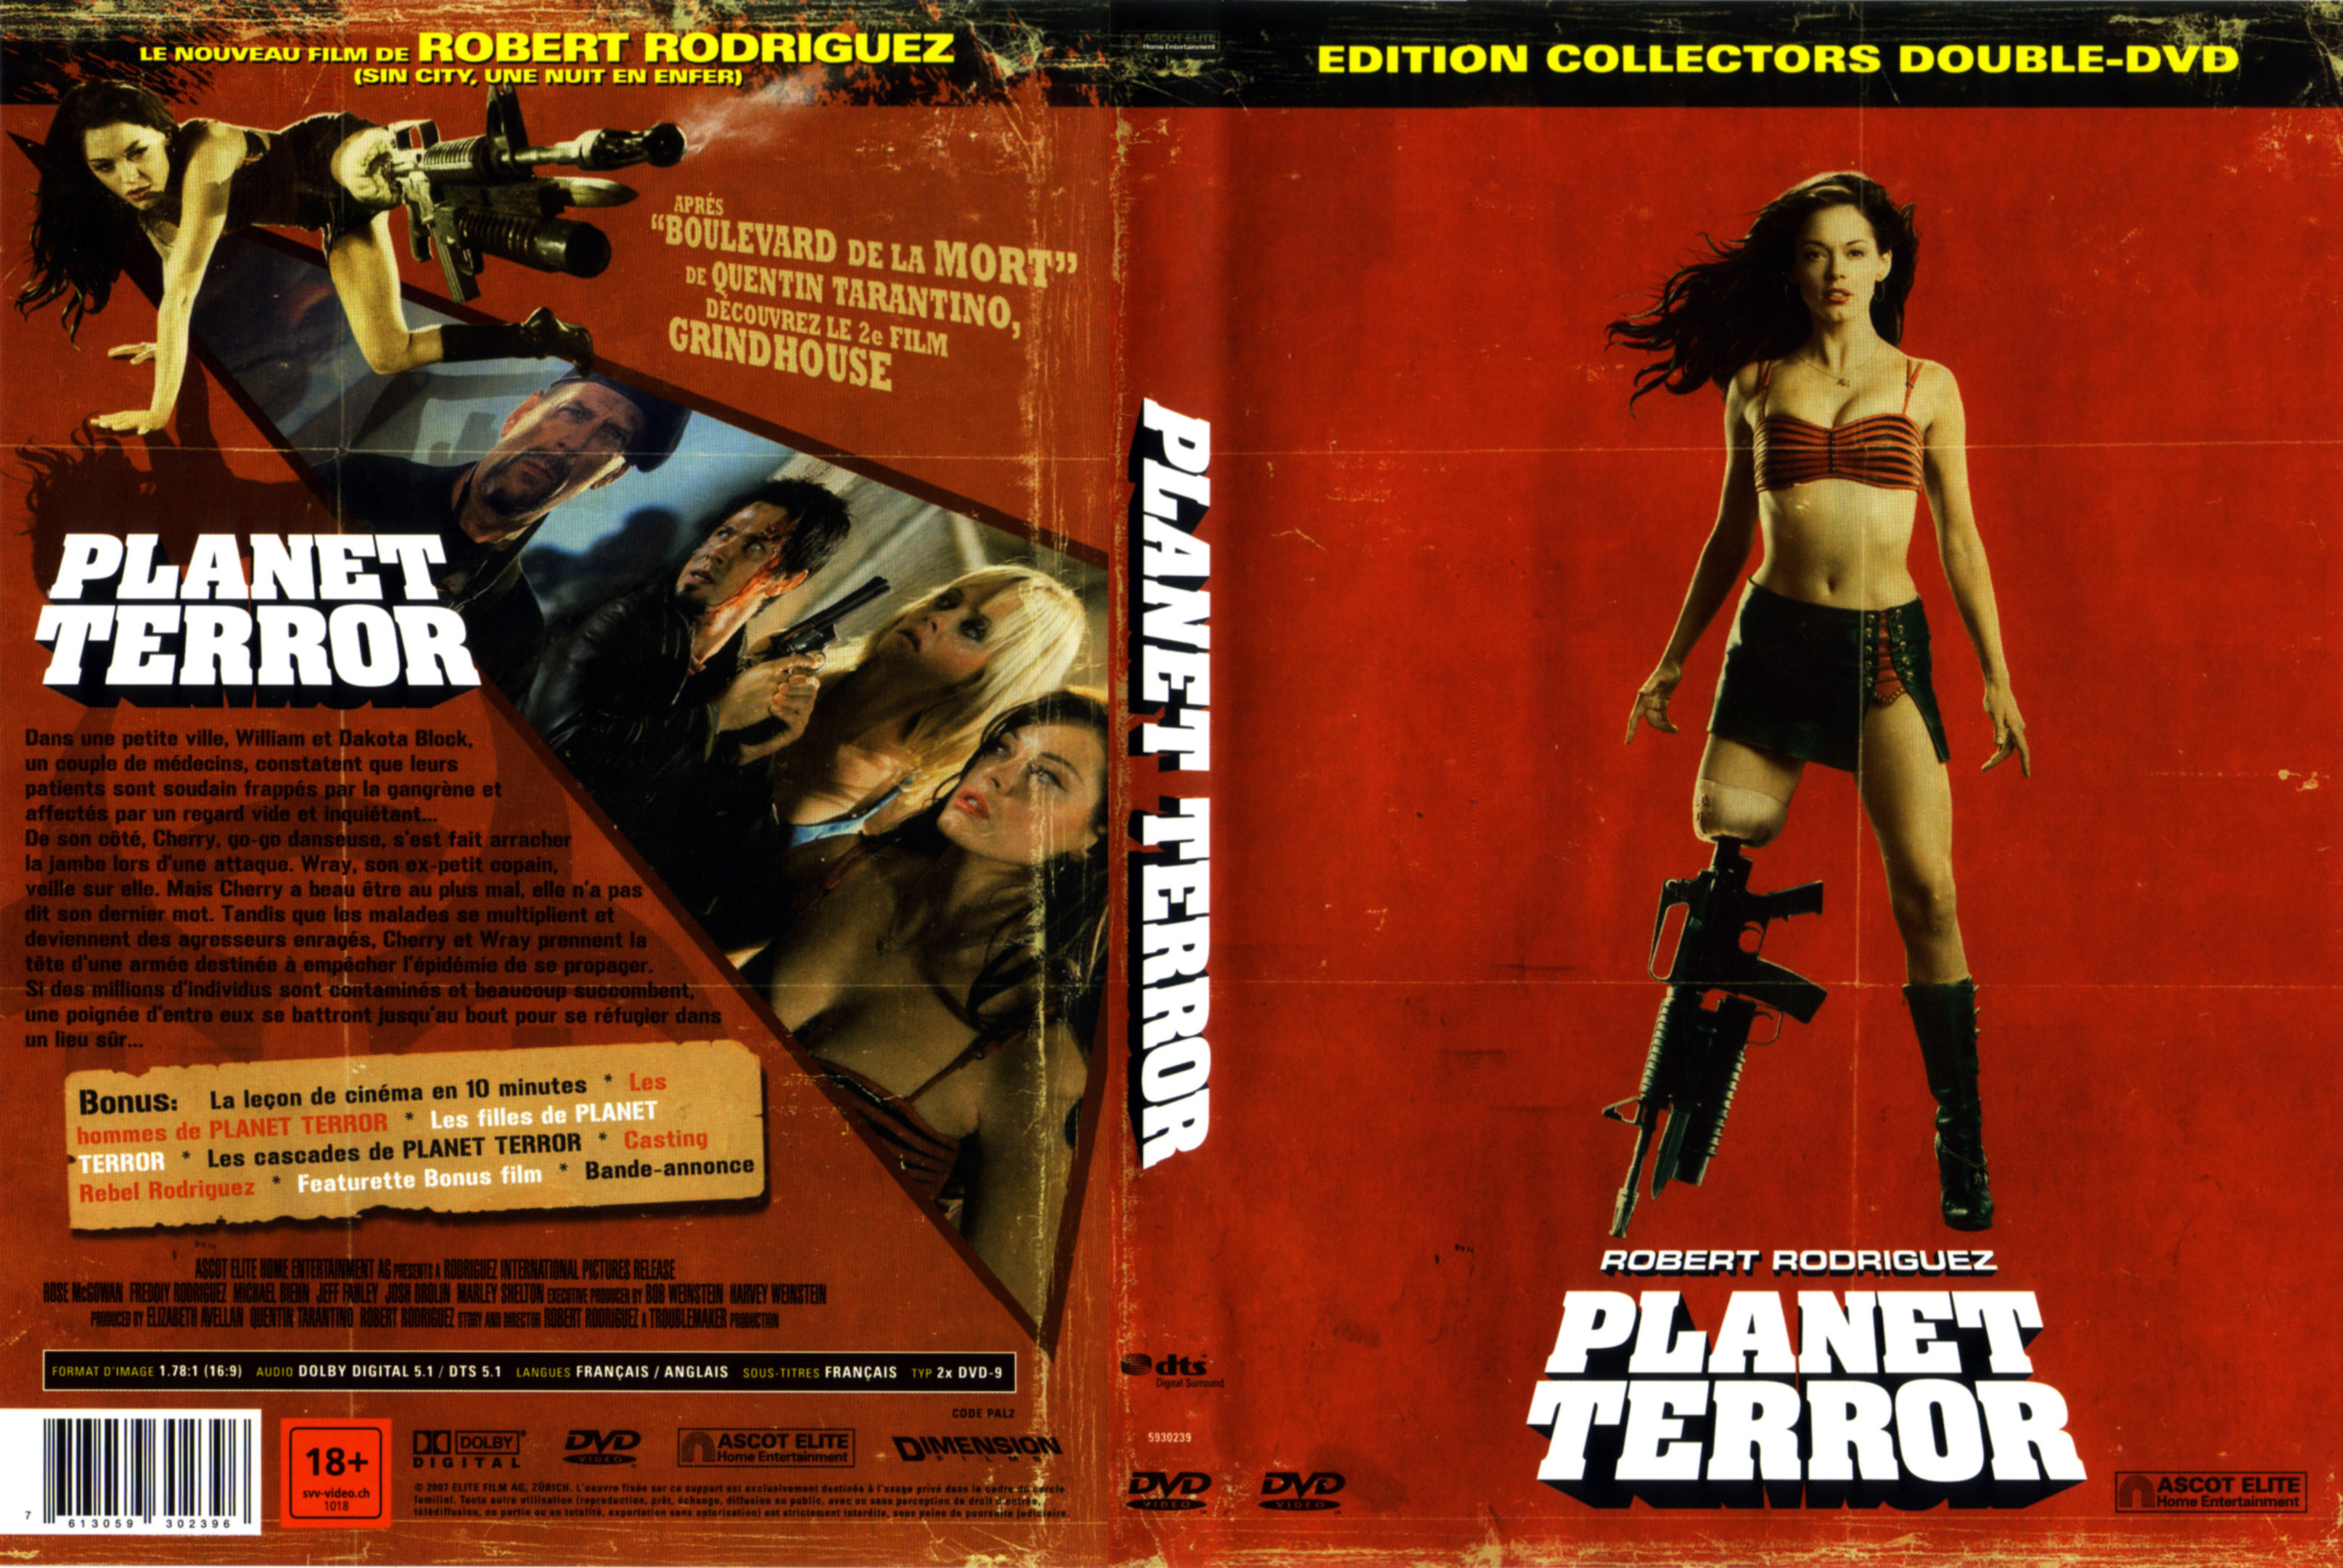 Jaquette DVD Planet terror